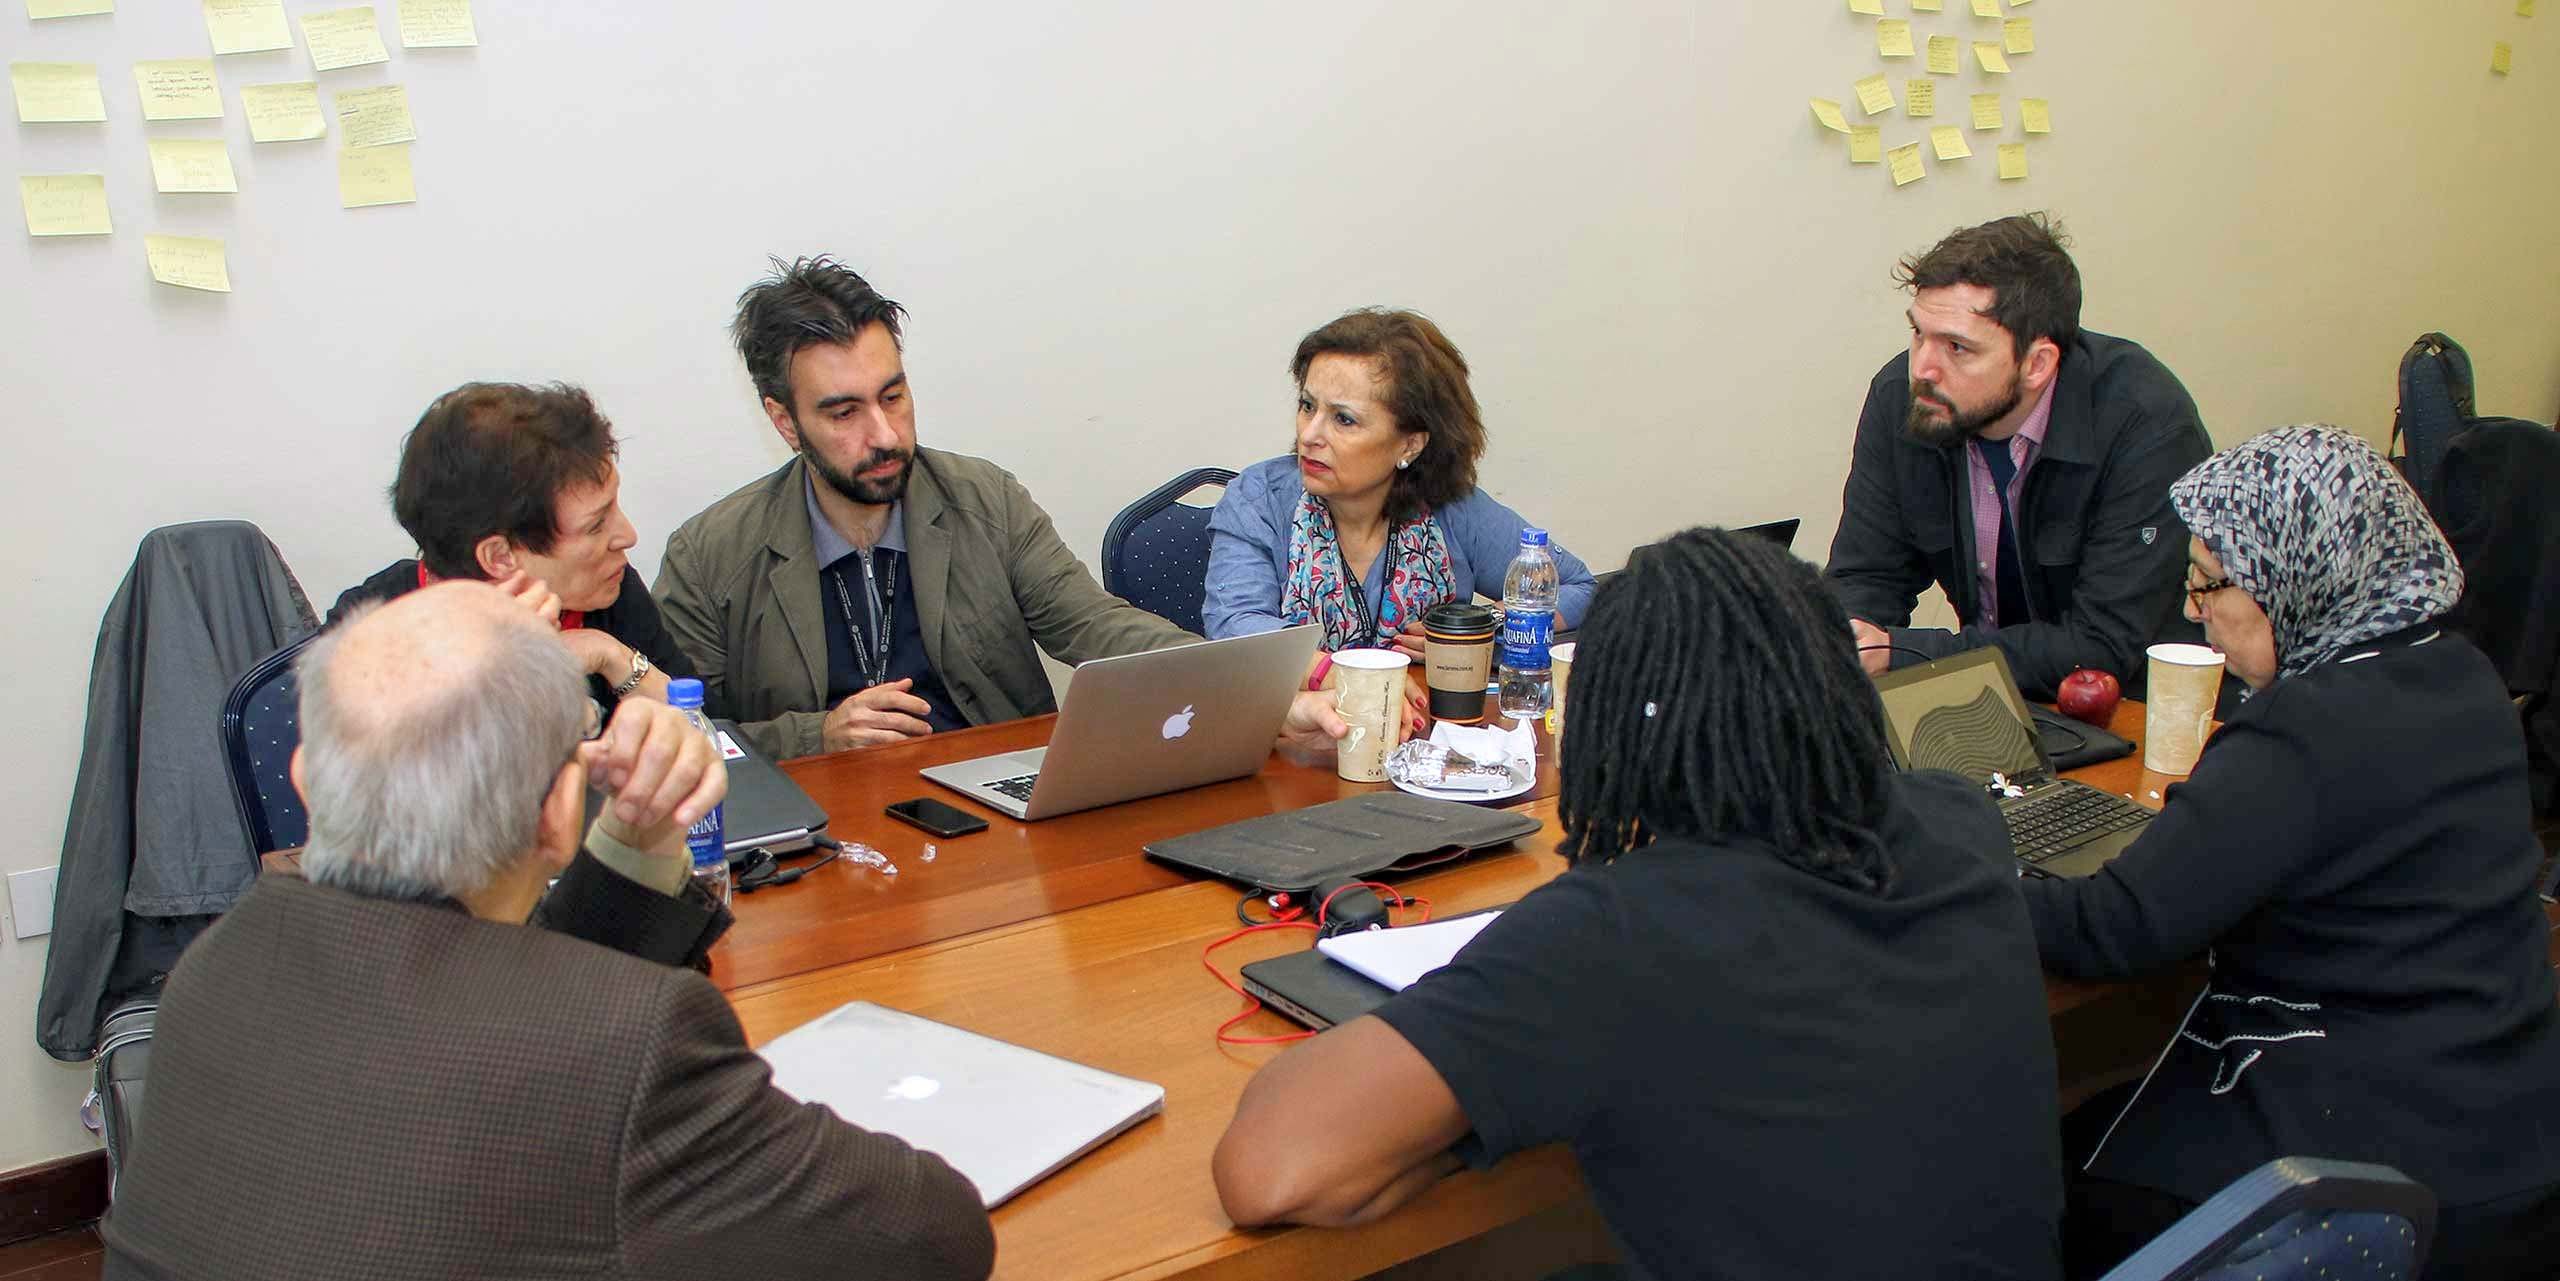 Participants collaborating at the Digital Pedagogoy Lab Cairo, 2016.